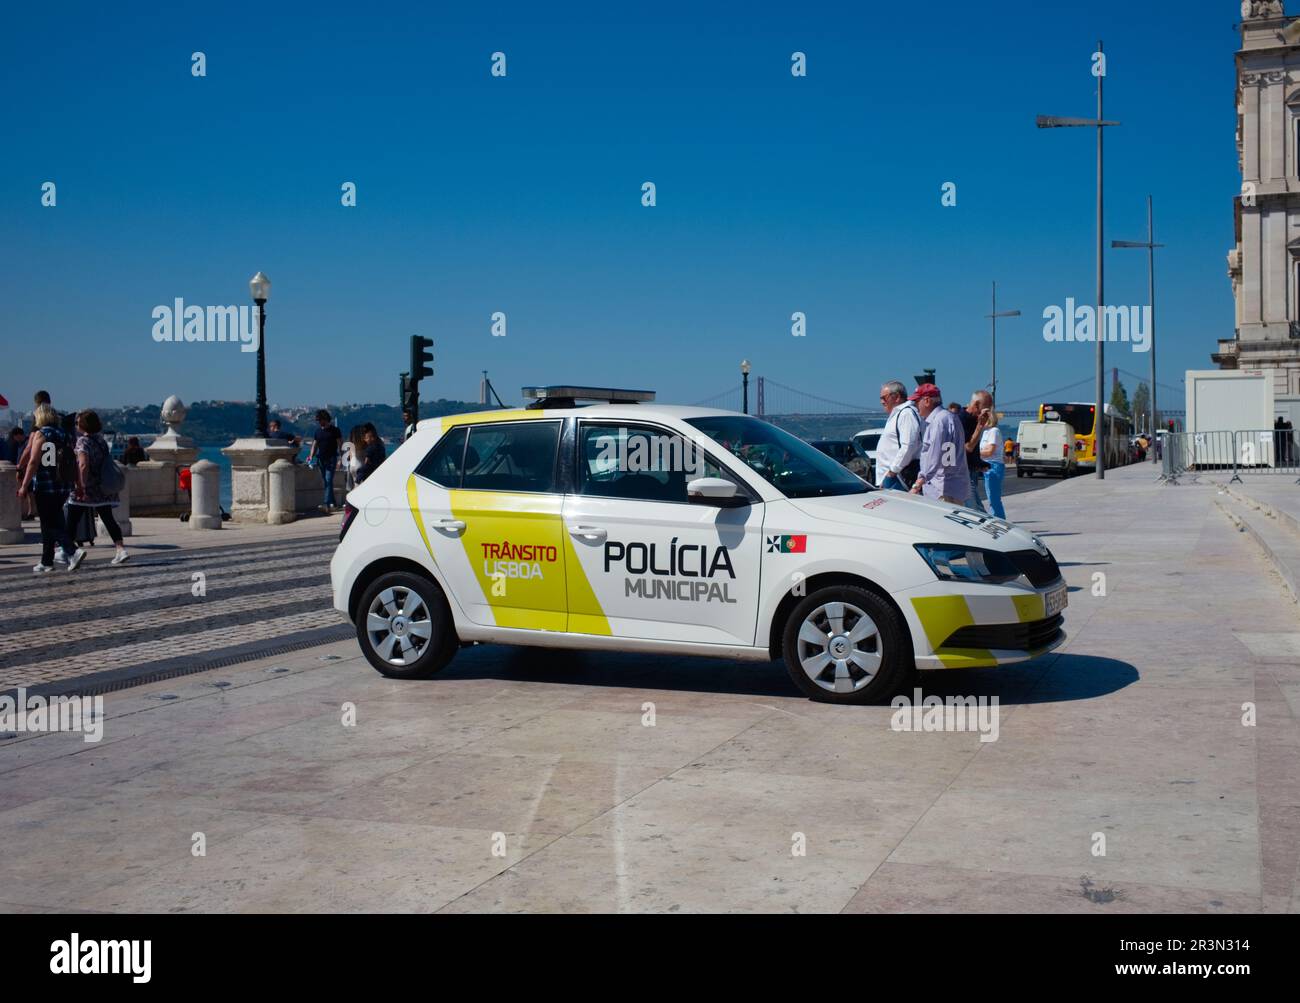 Polícia Municipal patrol car in the centre of Lisbon Stock Photo